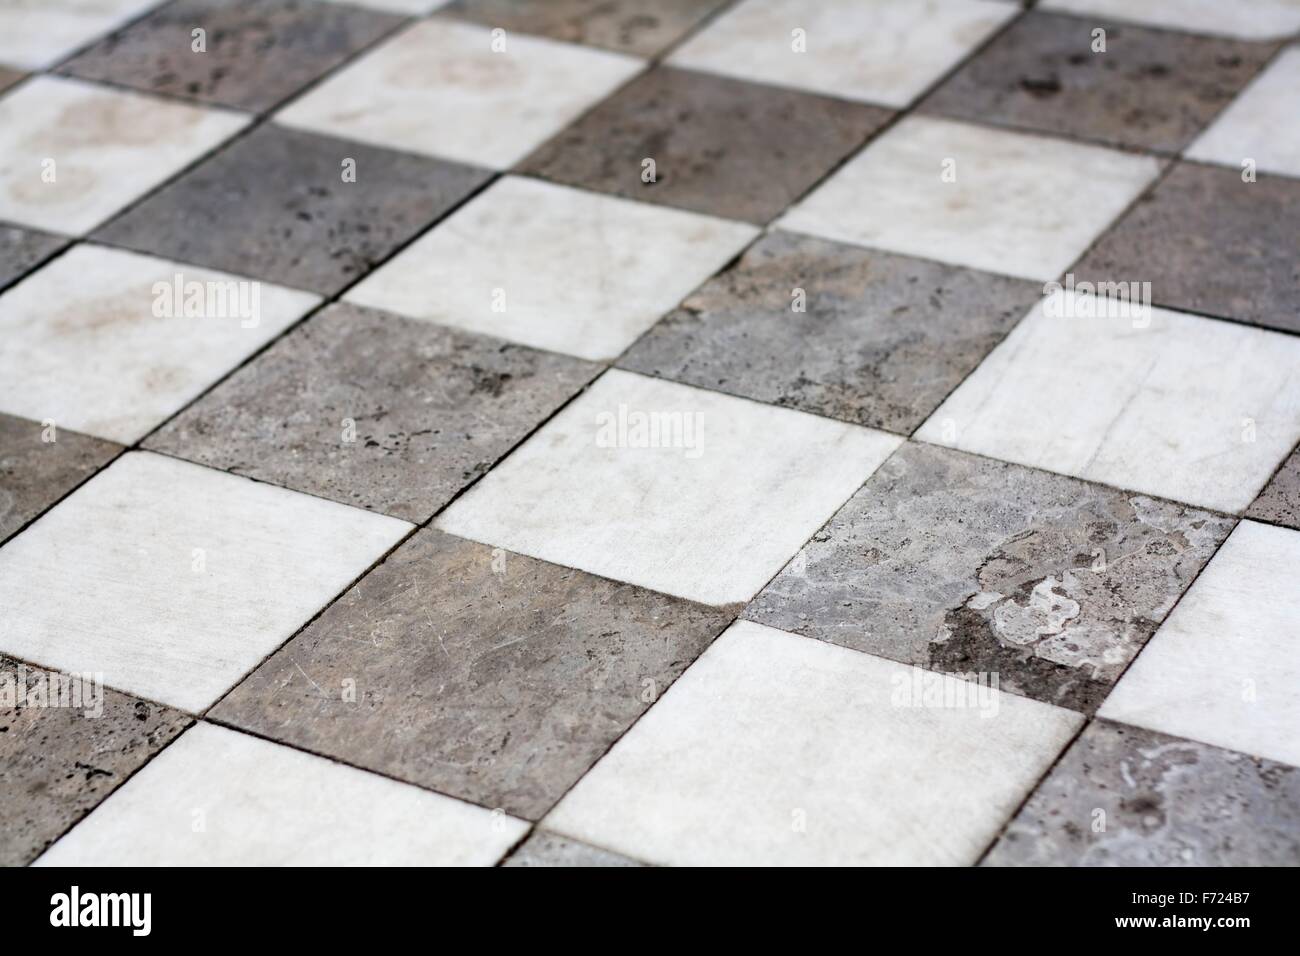 Stone tiled floor, chessboard like pattern Stock Photo